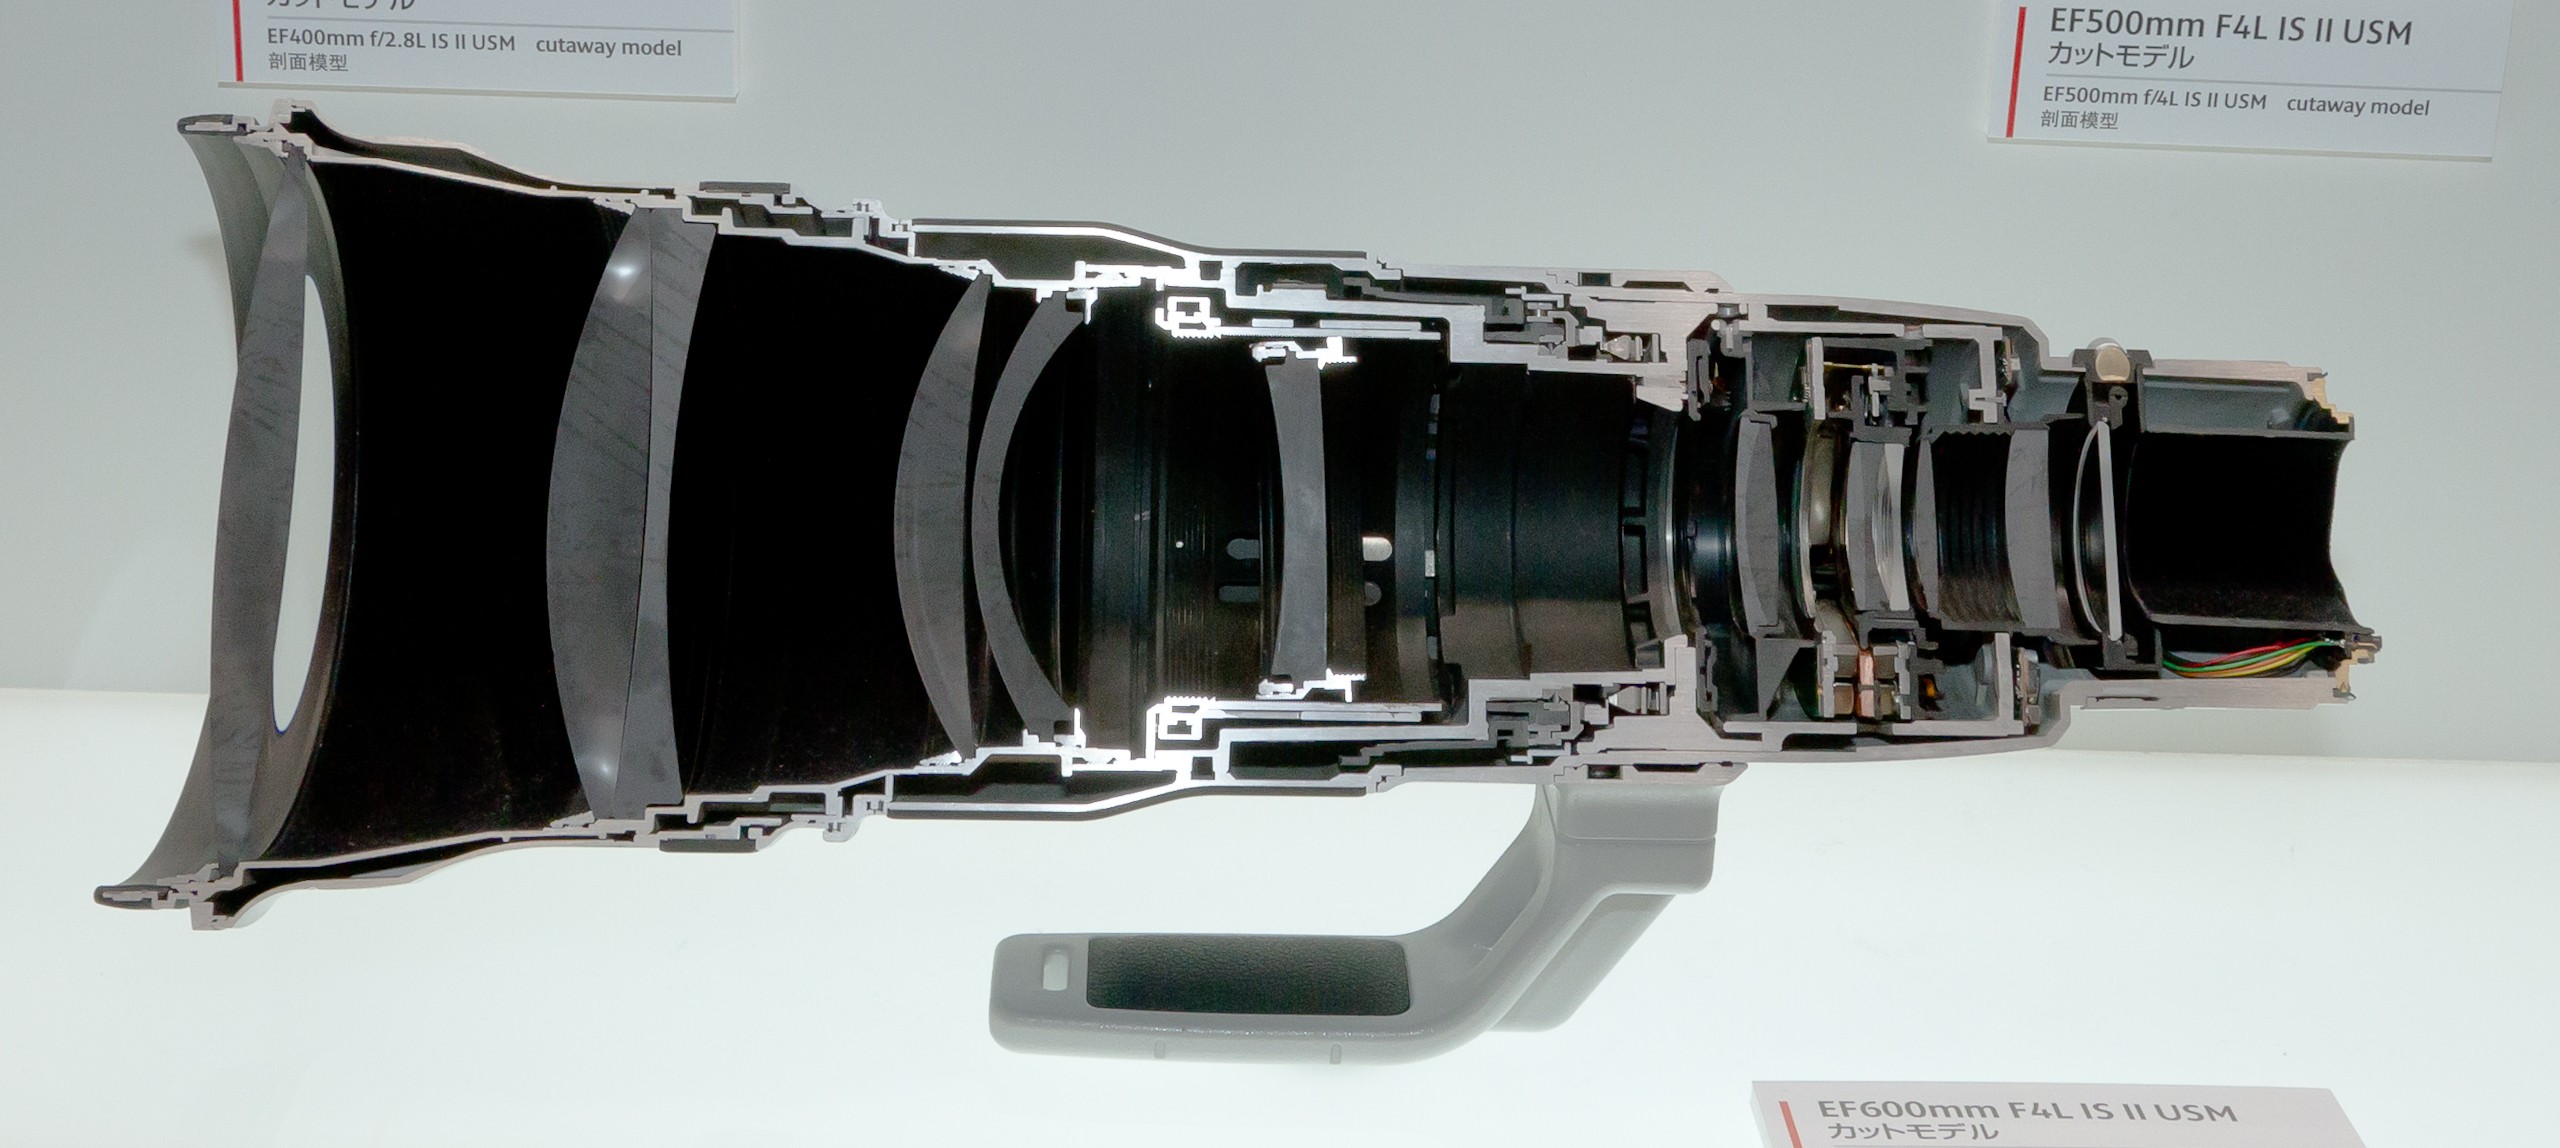 Canon EF600mmm F4L IS II USM cutaway 2012 CP+